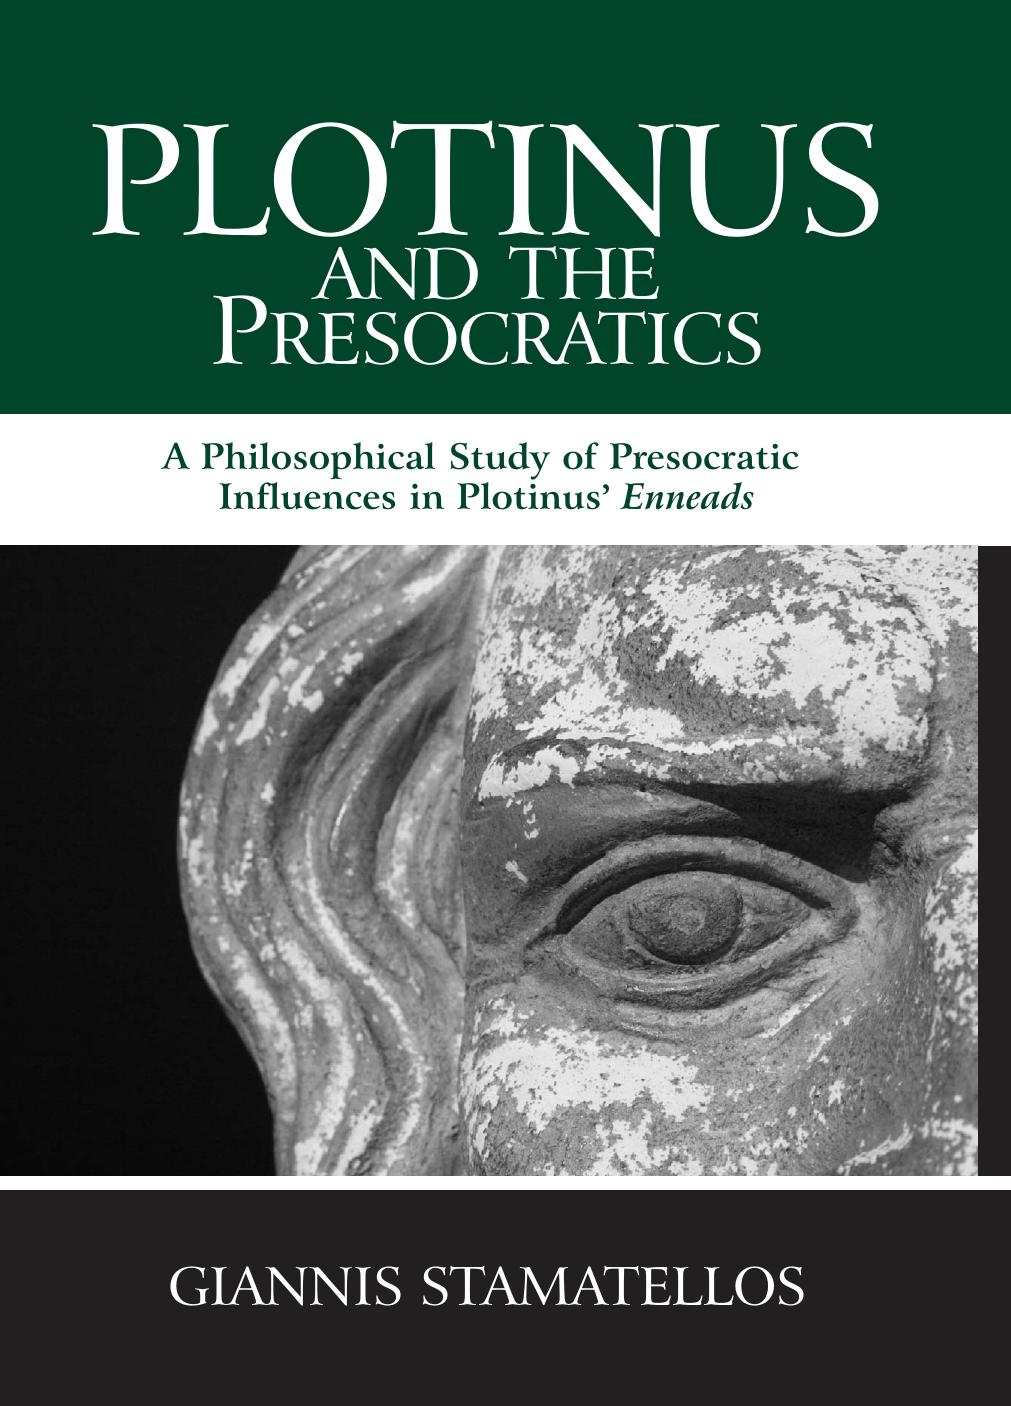 Plotinus and the Presocratics: A Philosophical Study of Presocratic Influences in Plotinus' Enneads